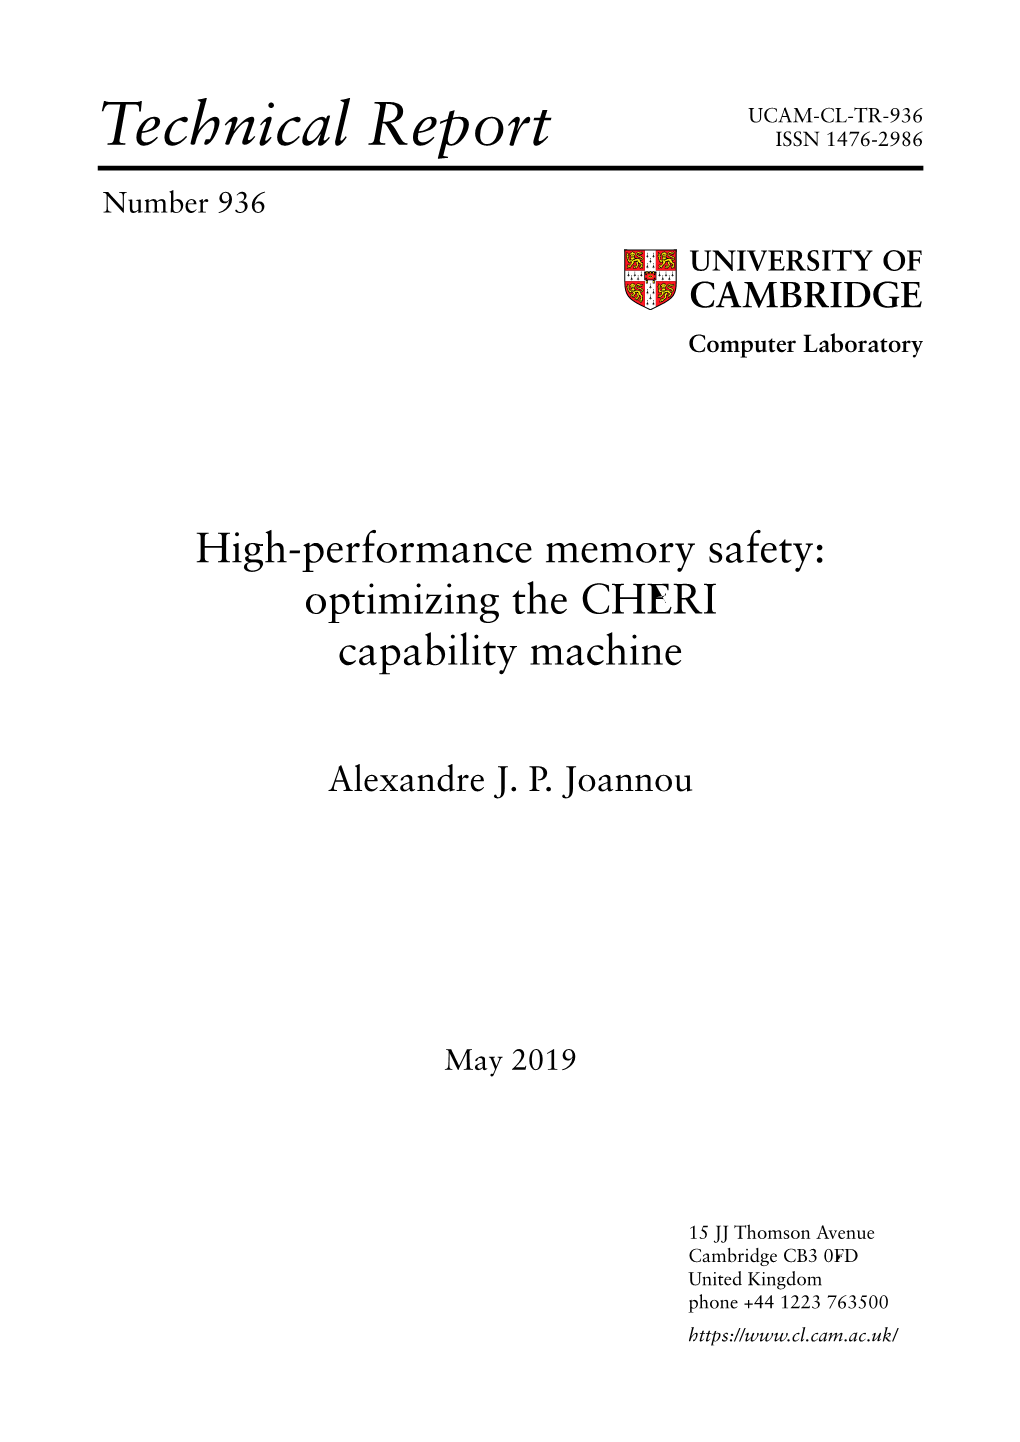 High-Performance Memory Safety: Optimizing the CHERI Capability Machine